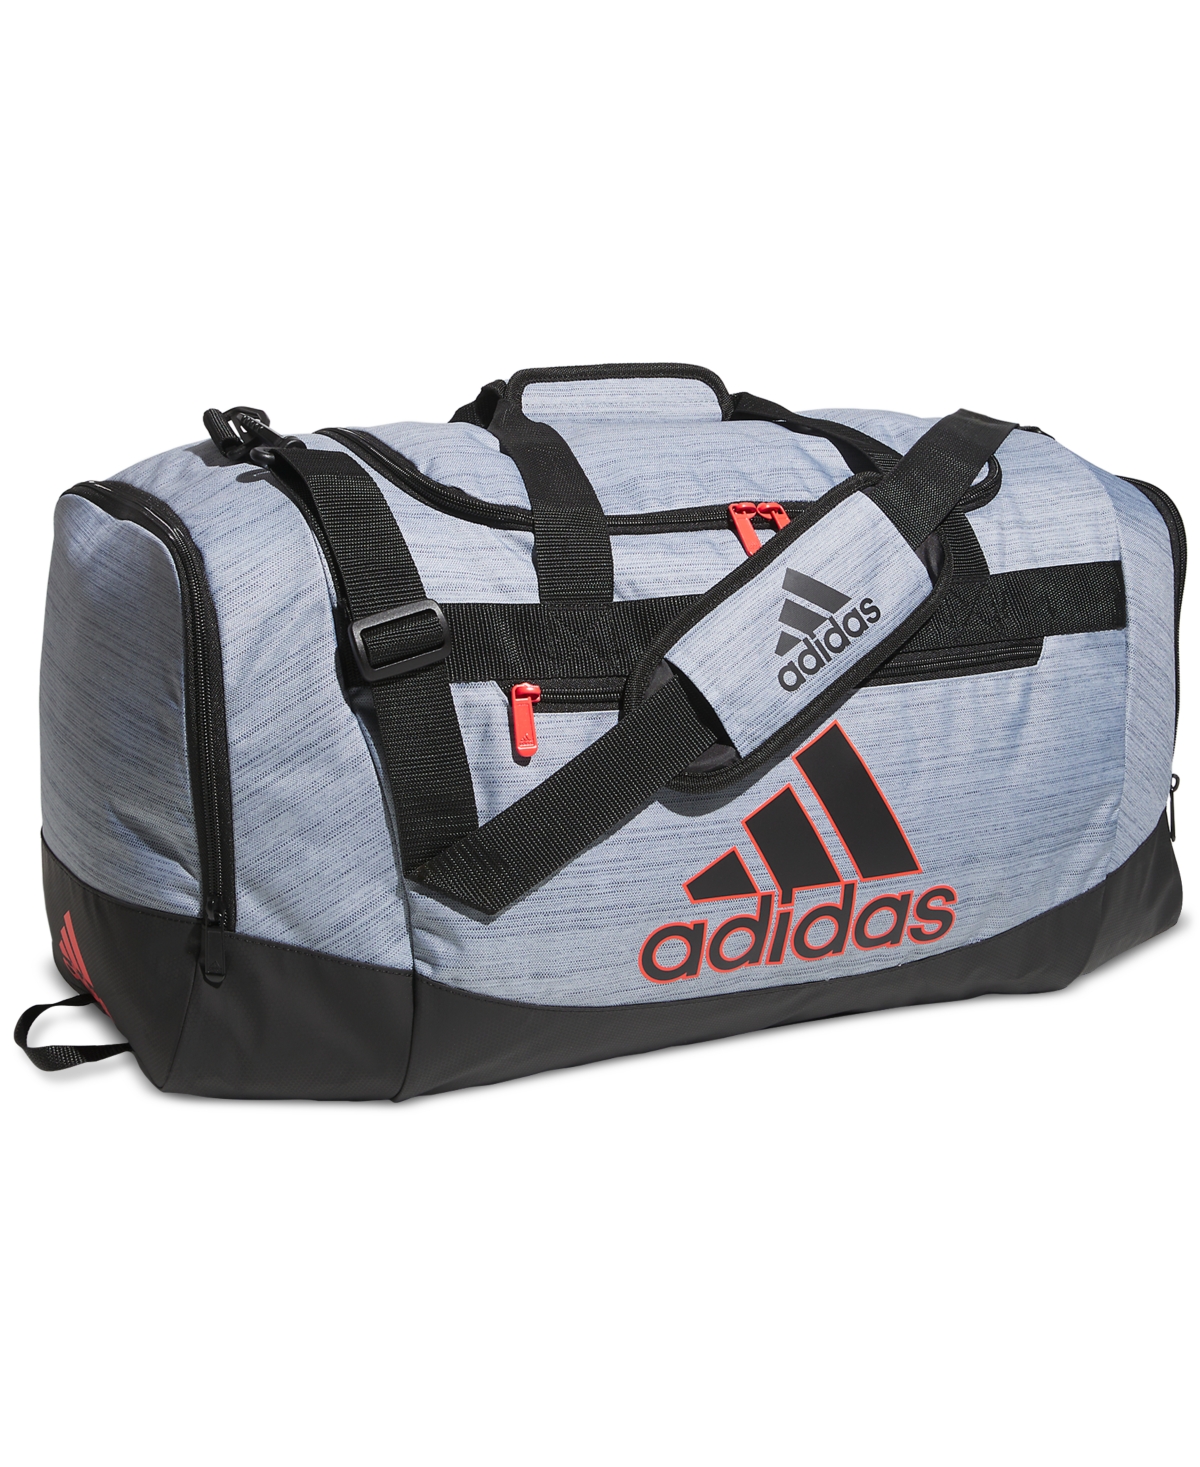 Adidas Originals Men's Defender Iv Medium Duffel Bag In Two Tone Grey Two,black,bright Red